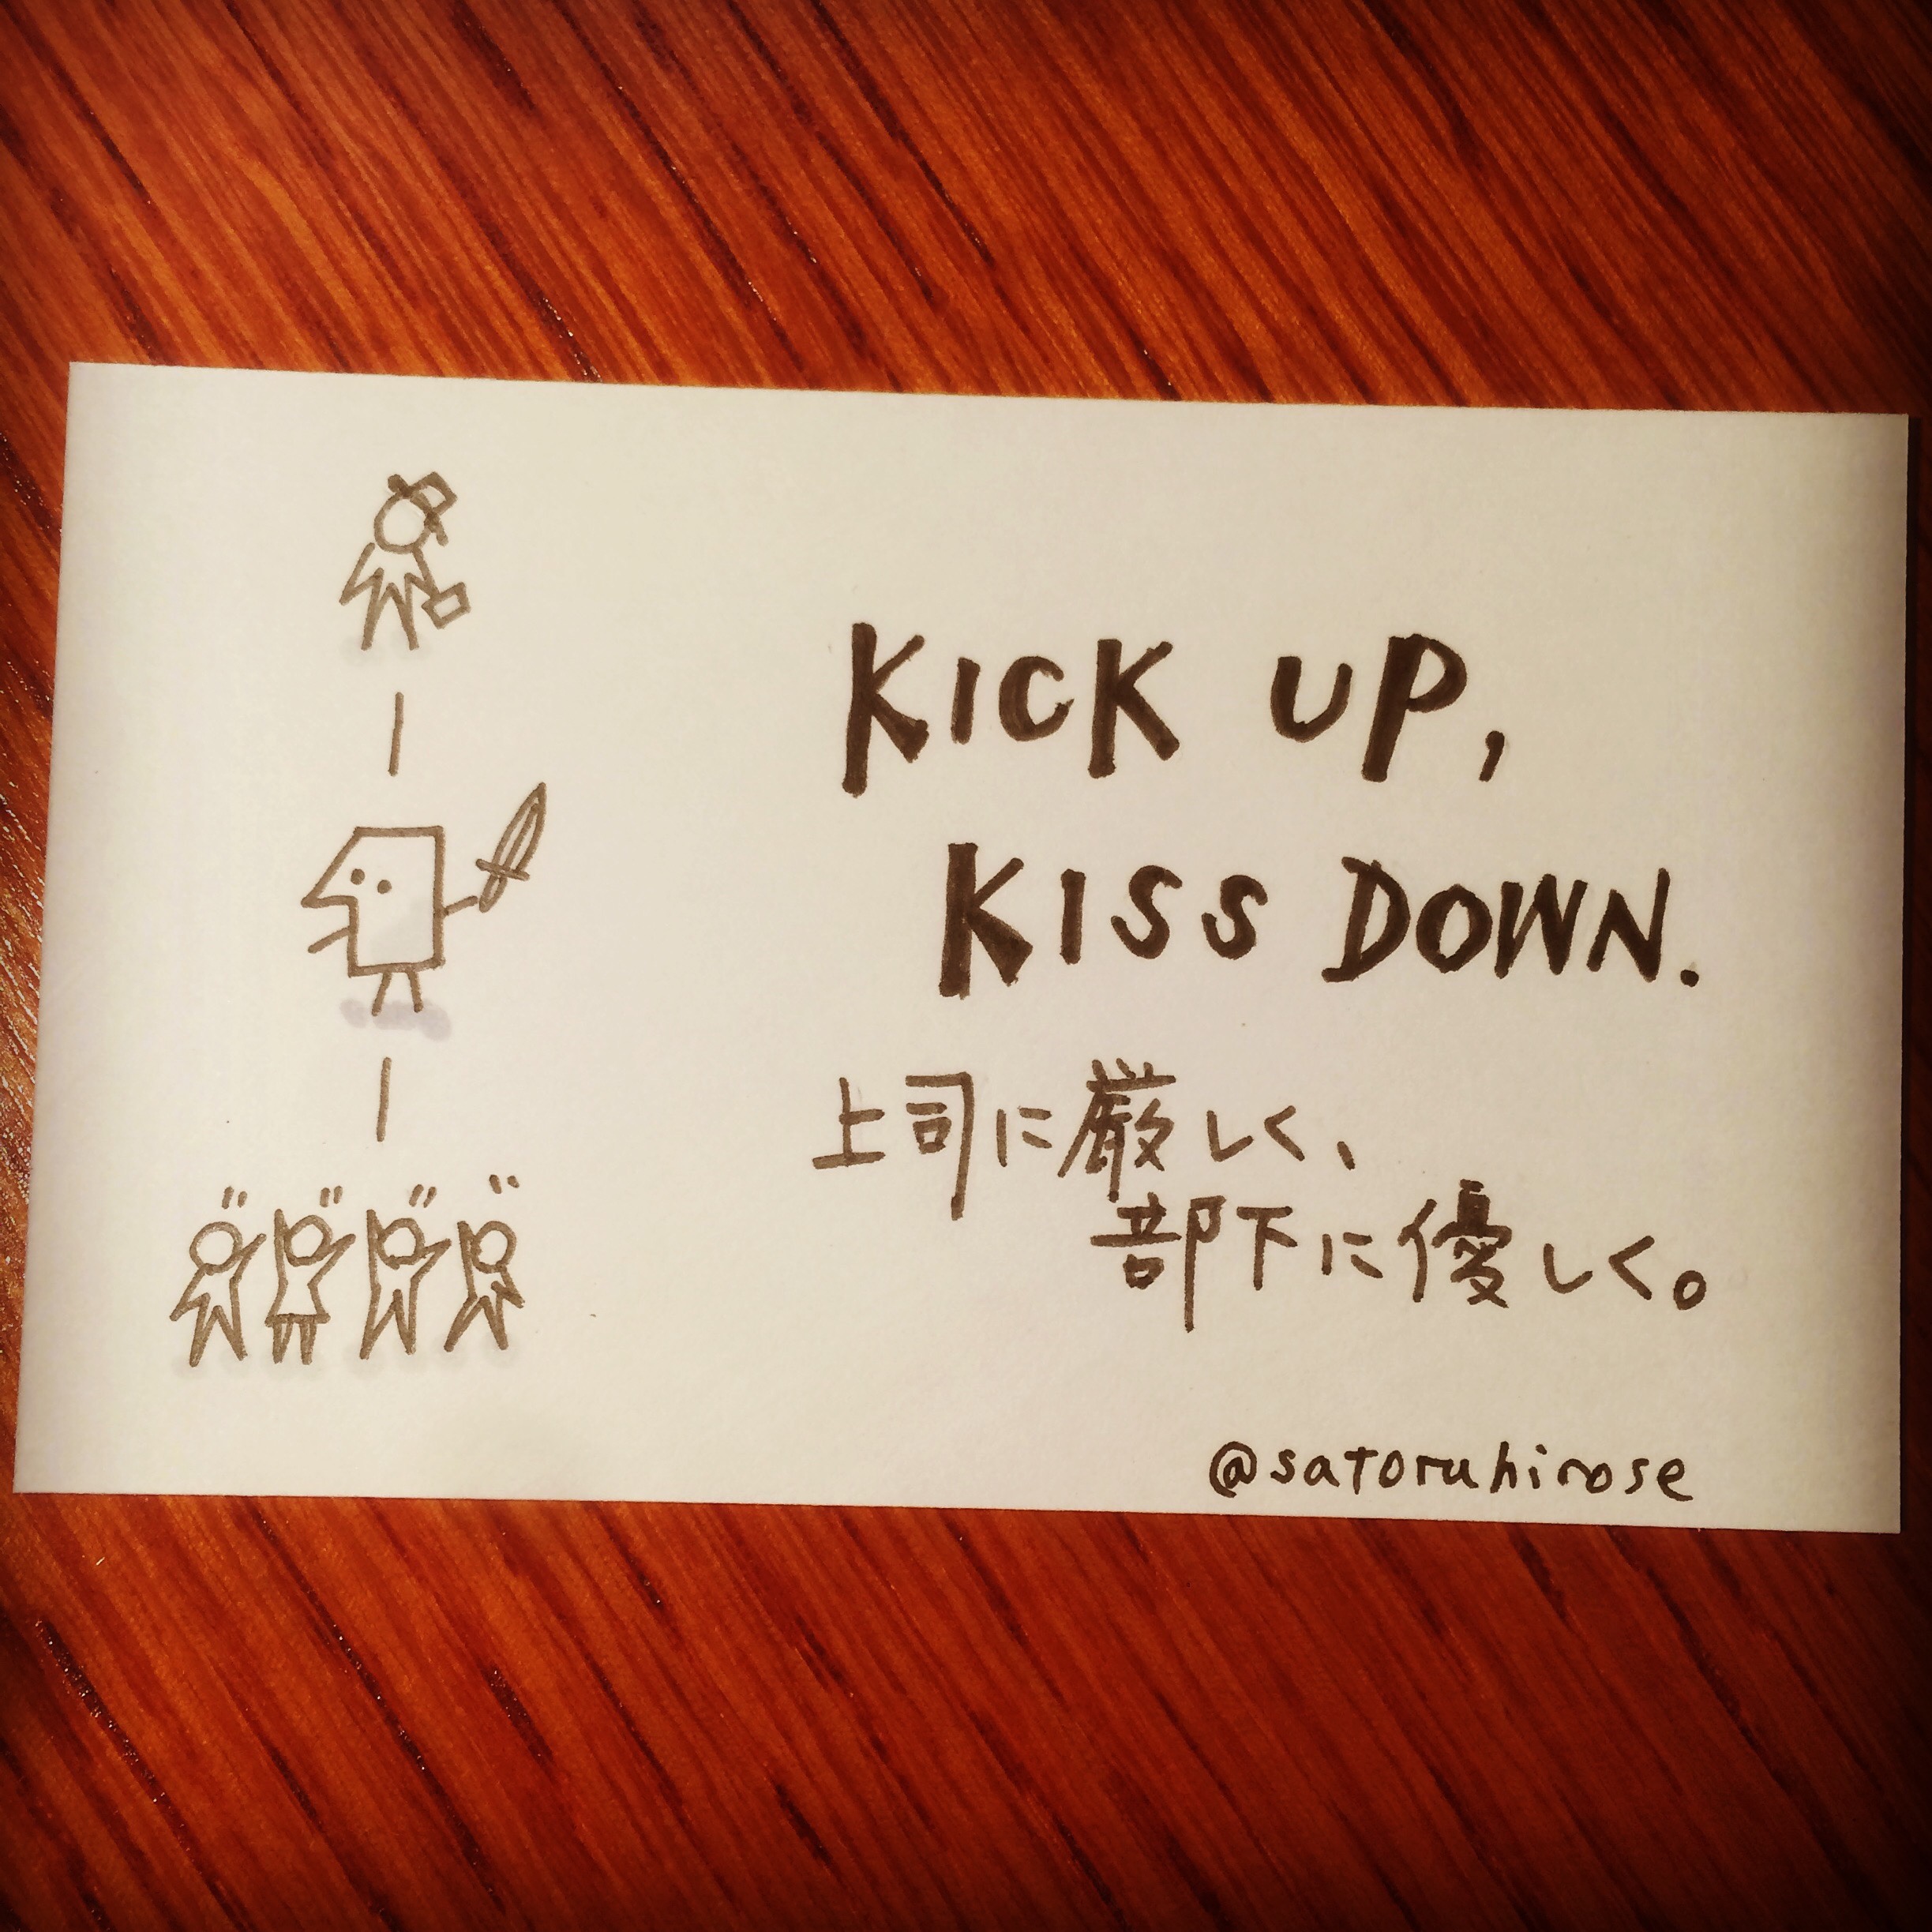 Kick up, kiss down.